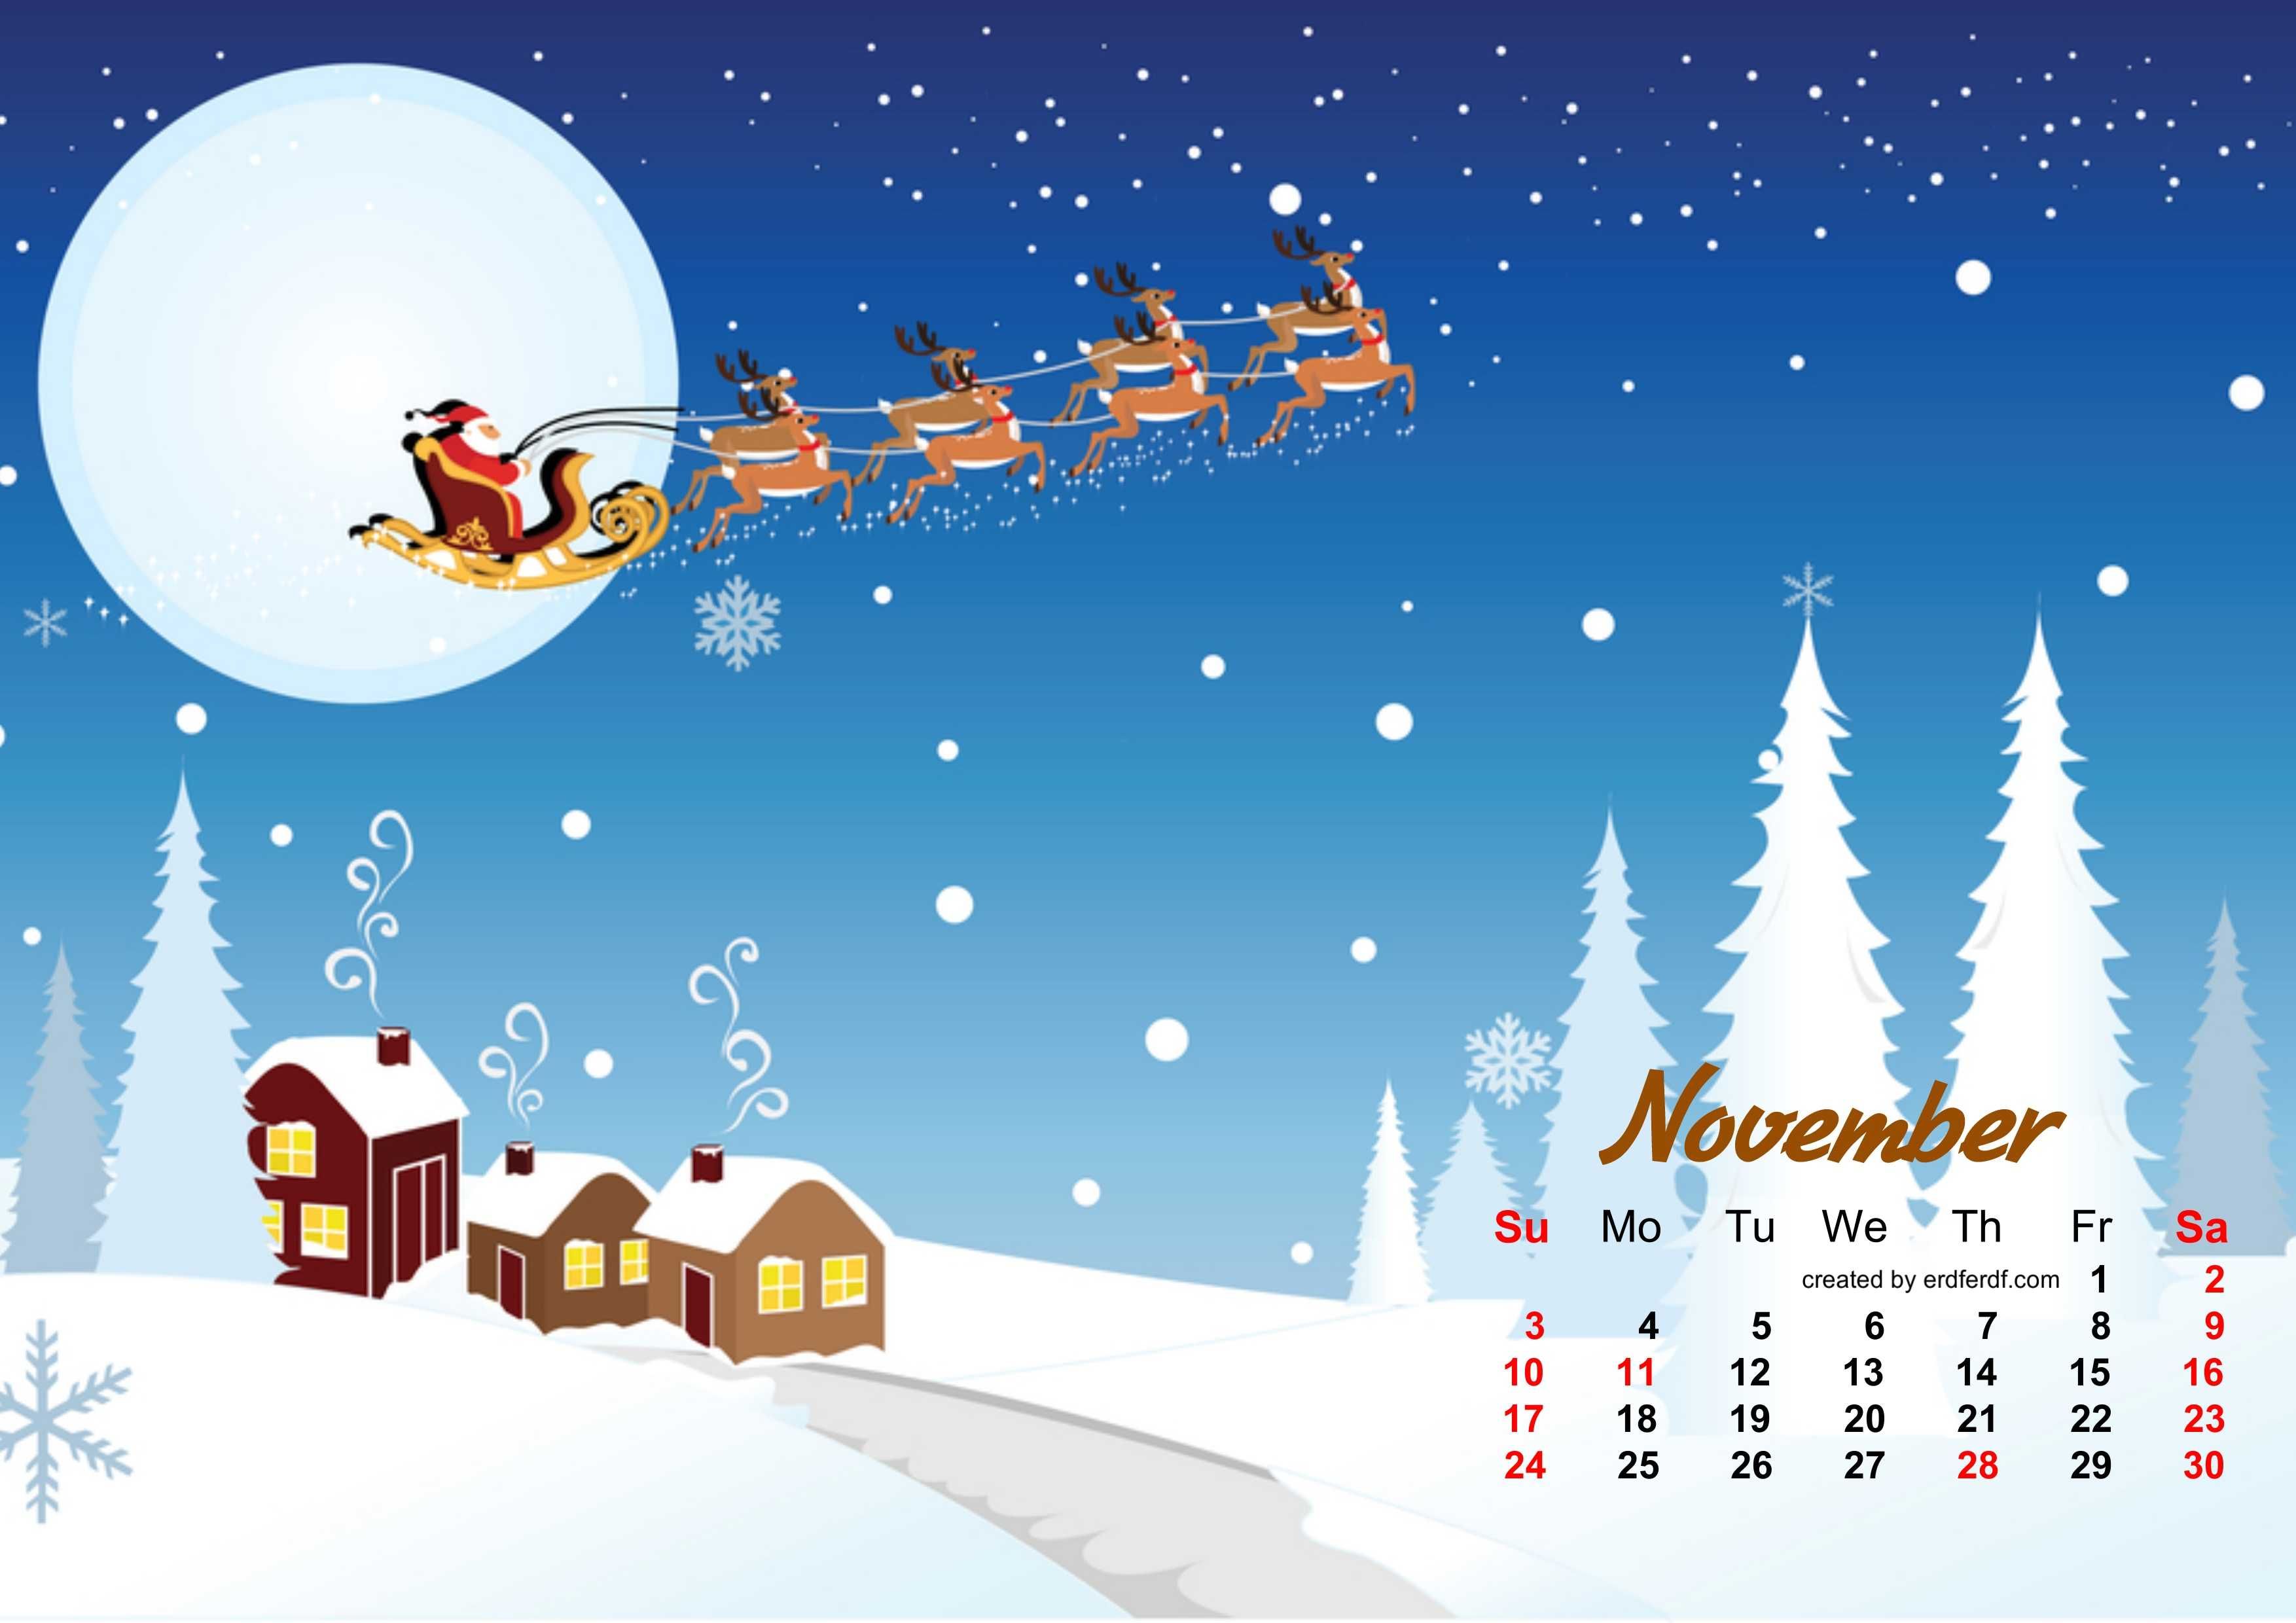 Santa Clause December 2019 Desktop Calendar Wallpaper Home in 2019